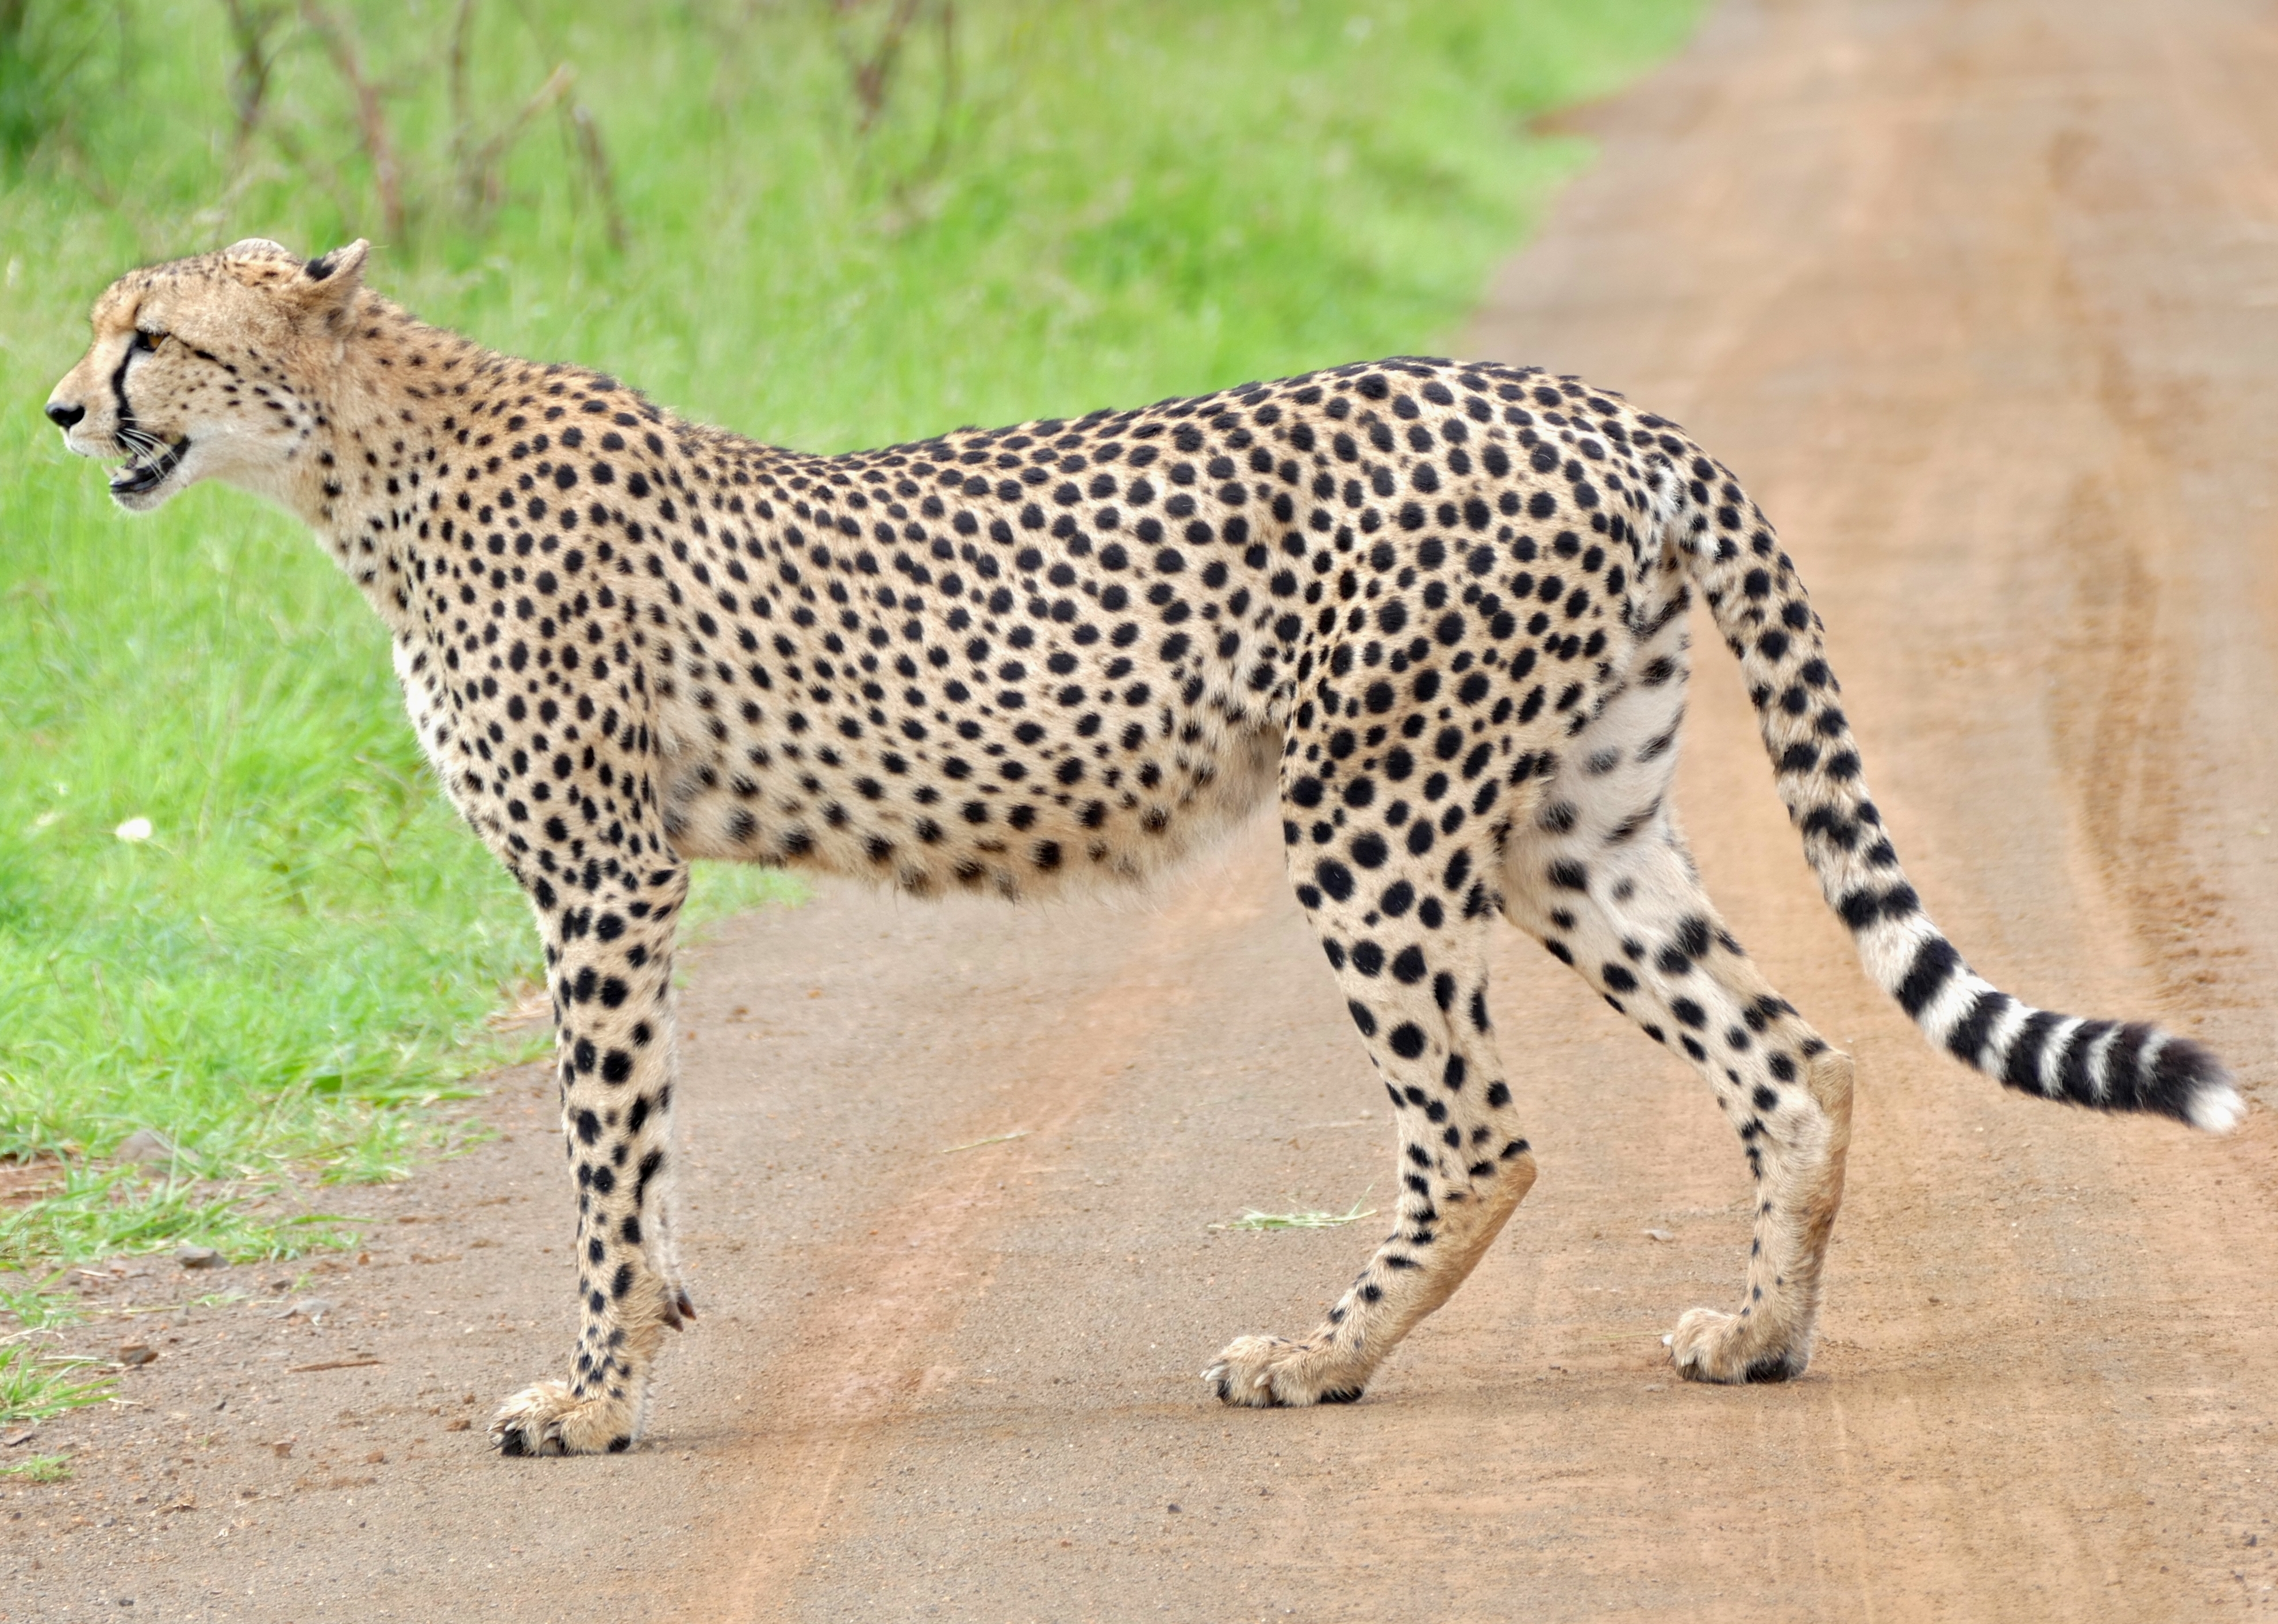 https://upload.wikimedia.org/wikipedia/commons/4/42/Cheetah_%28Acinonyx_jubatus%29_on_the_road.jpg